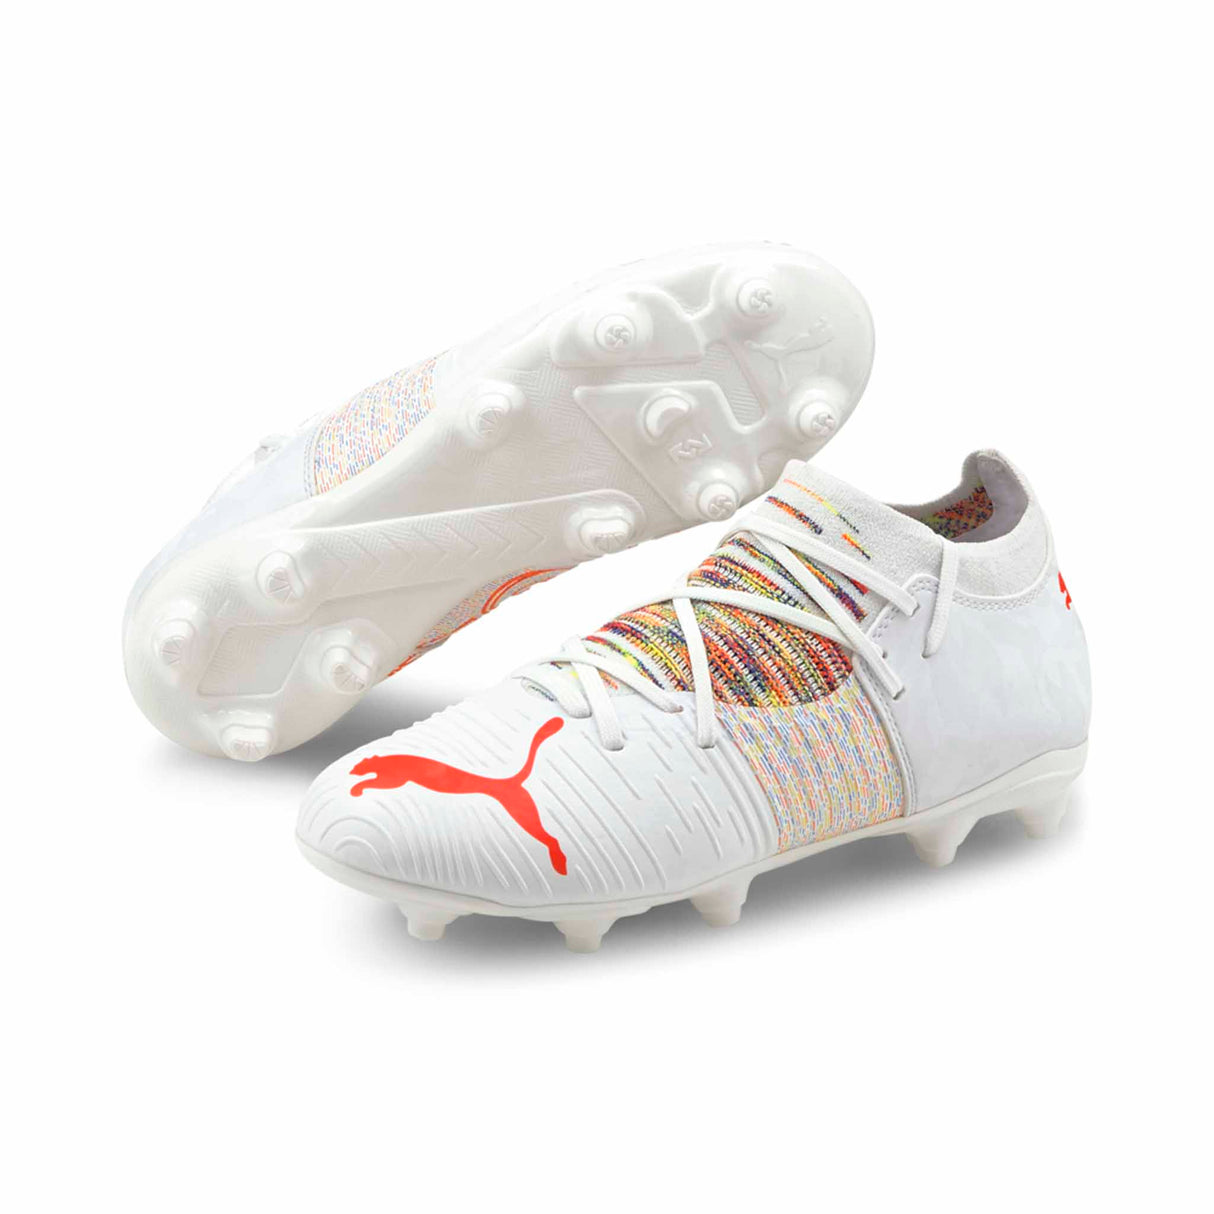 Puma Future Z 3.1 FG Chaussures de soccer a crampons junior Puma White/Red Blast paire